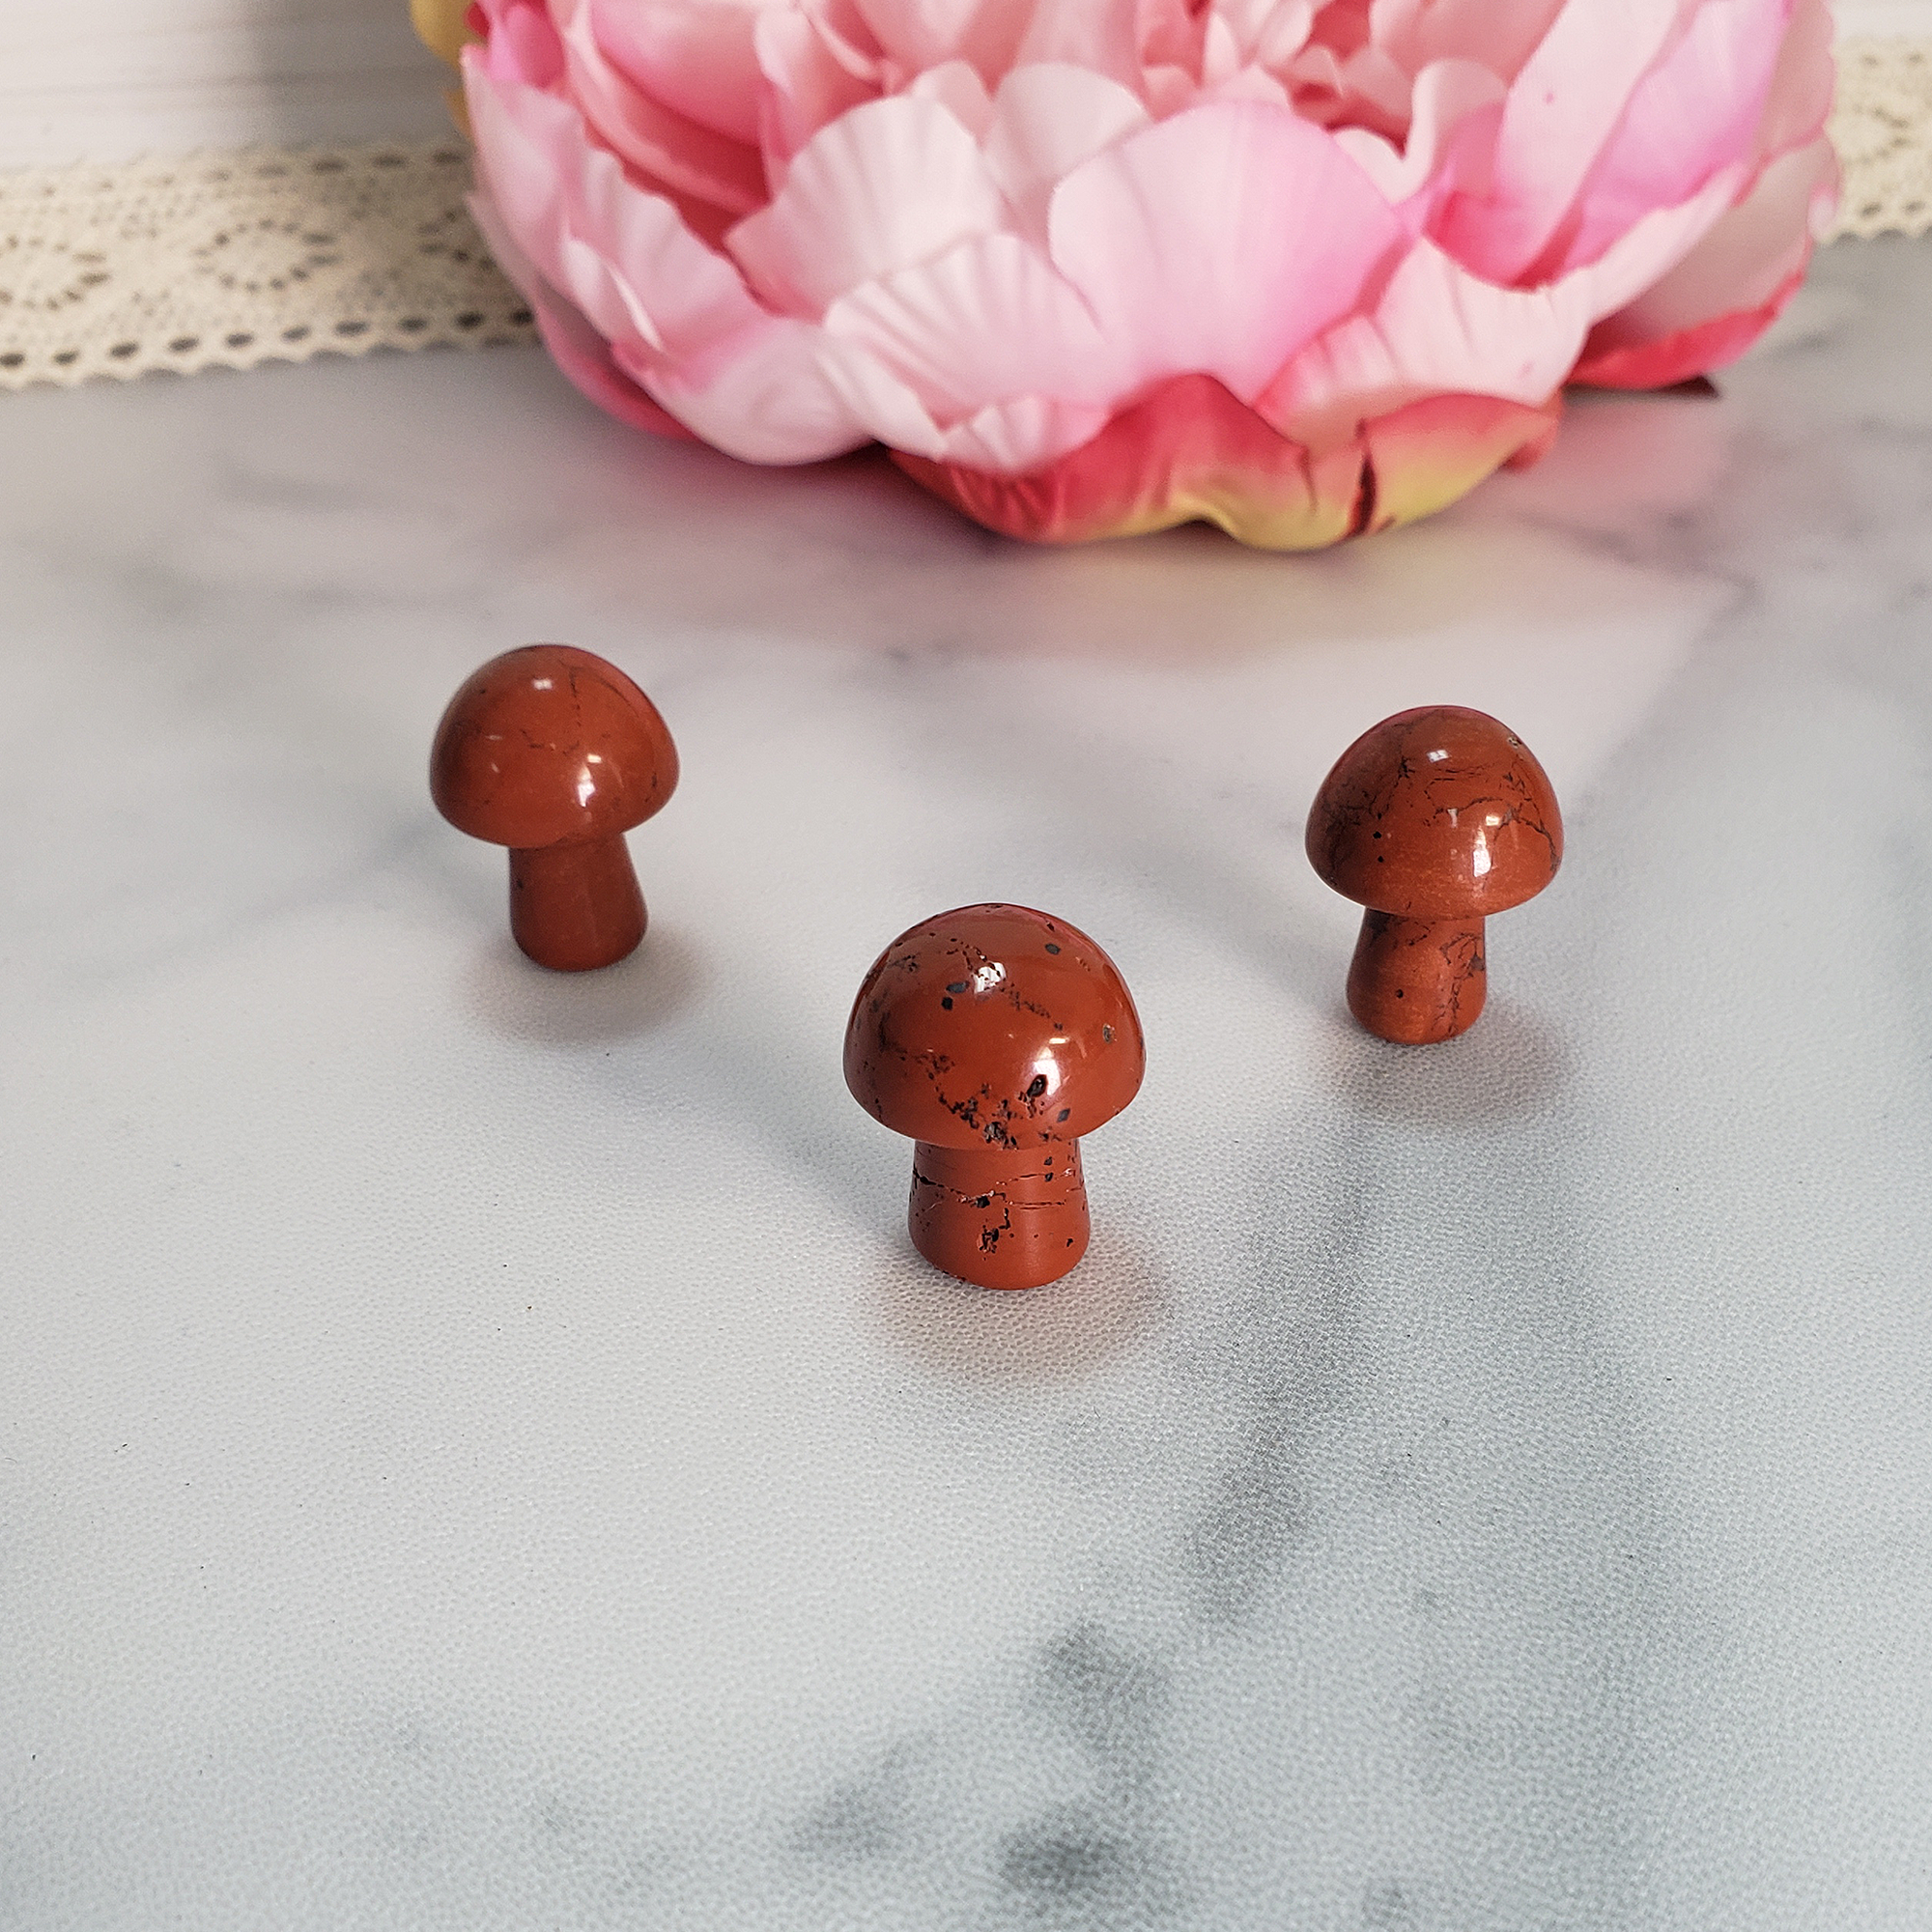 Red Jasper Stone Natural Crystal Mushroom Toadstool Mini Carving